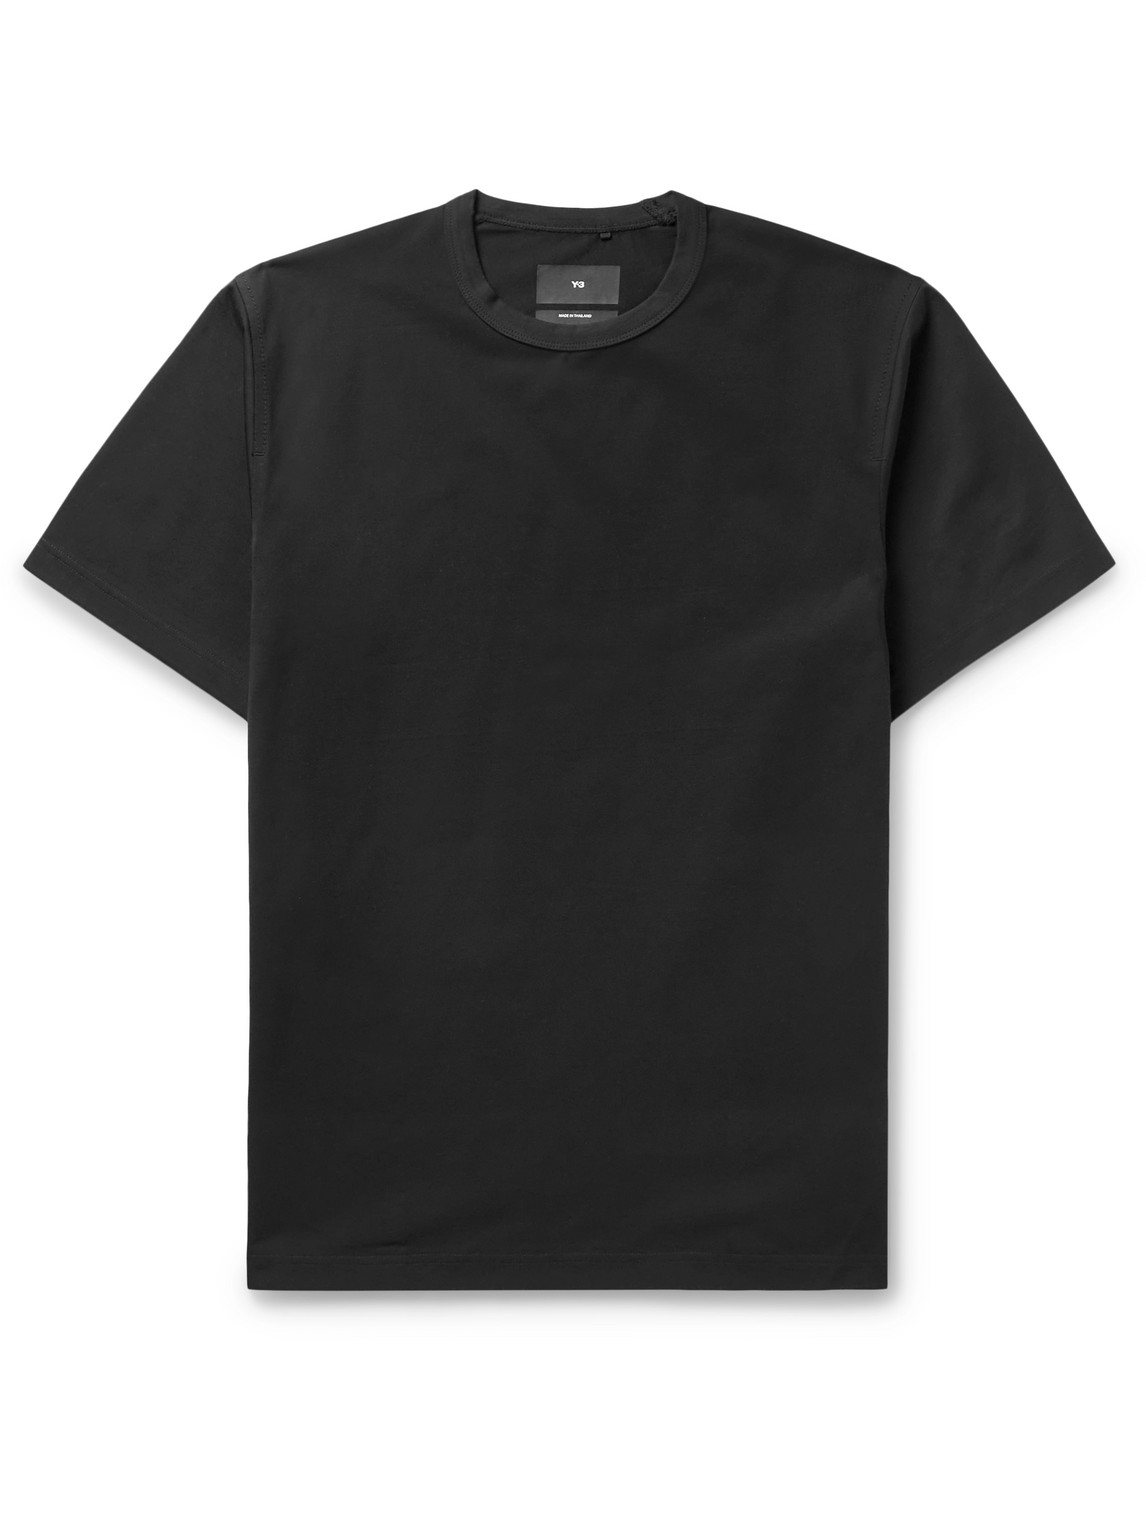 Y-3 Premium Cotton-Blend Jersey T-Shirt